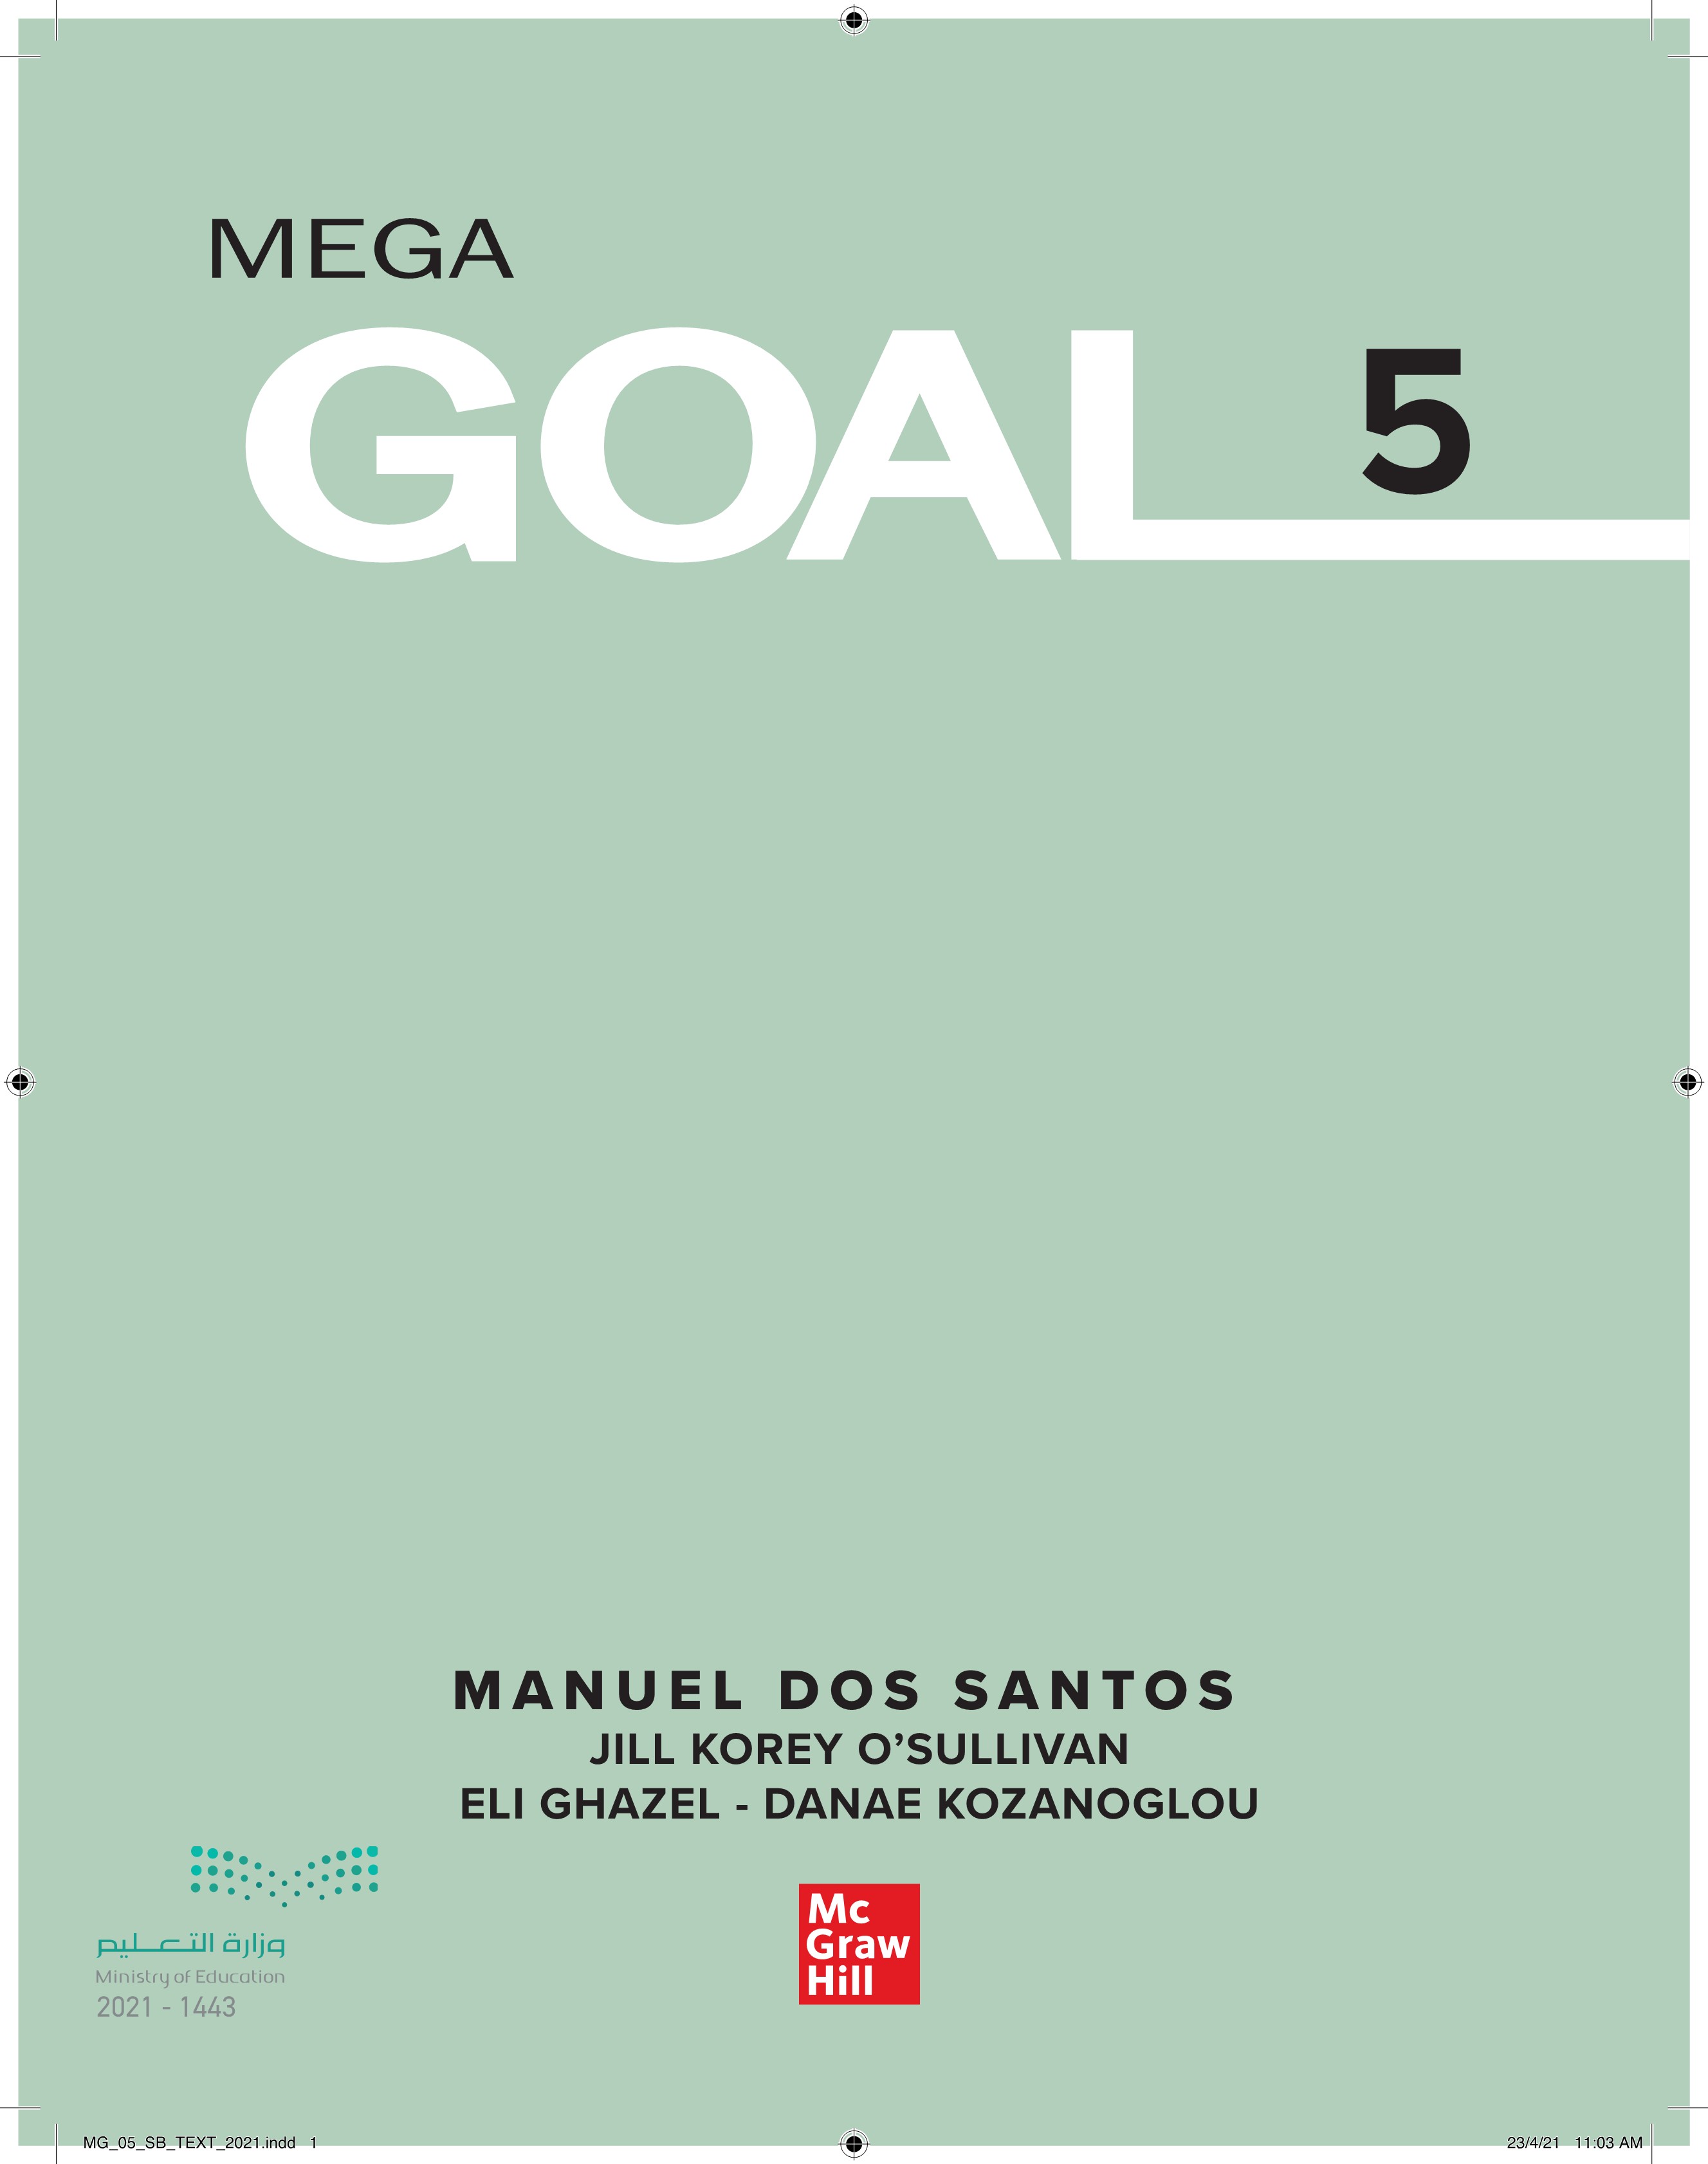 Mega goal 5